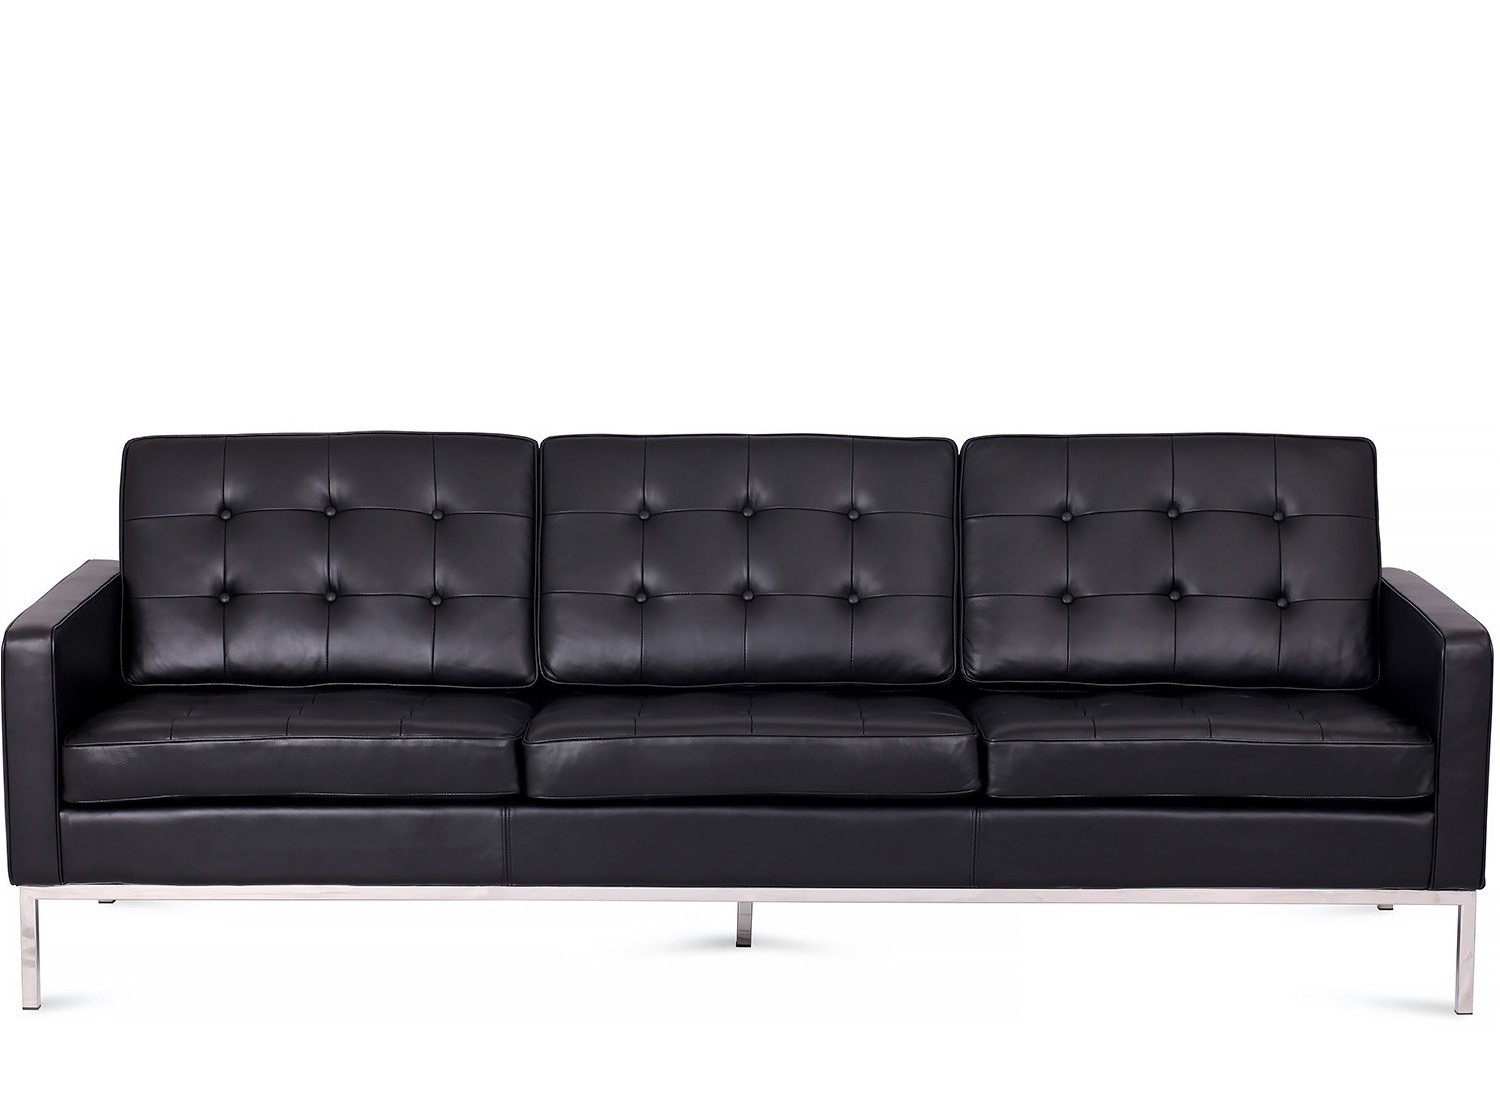 Ludwig Mies Vd Rohe 3 Seater Sofa, Genuine Leather Sofa Bed Australia